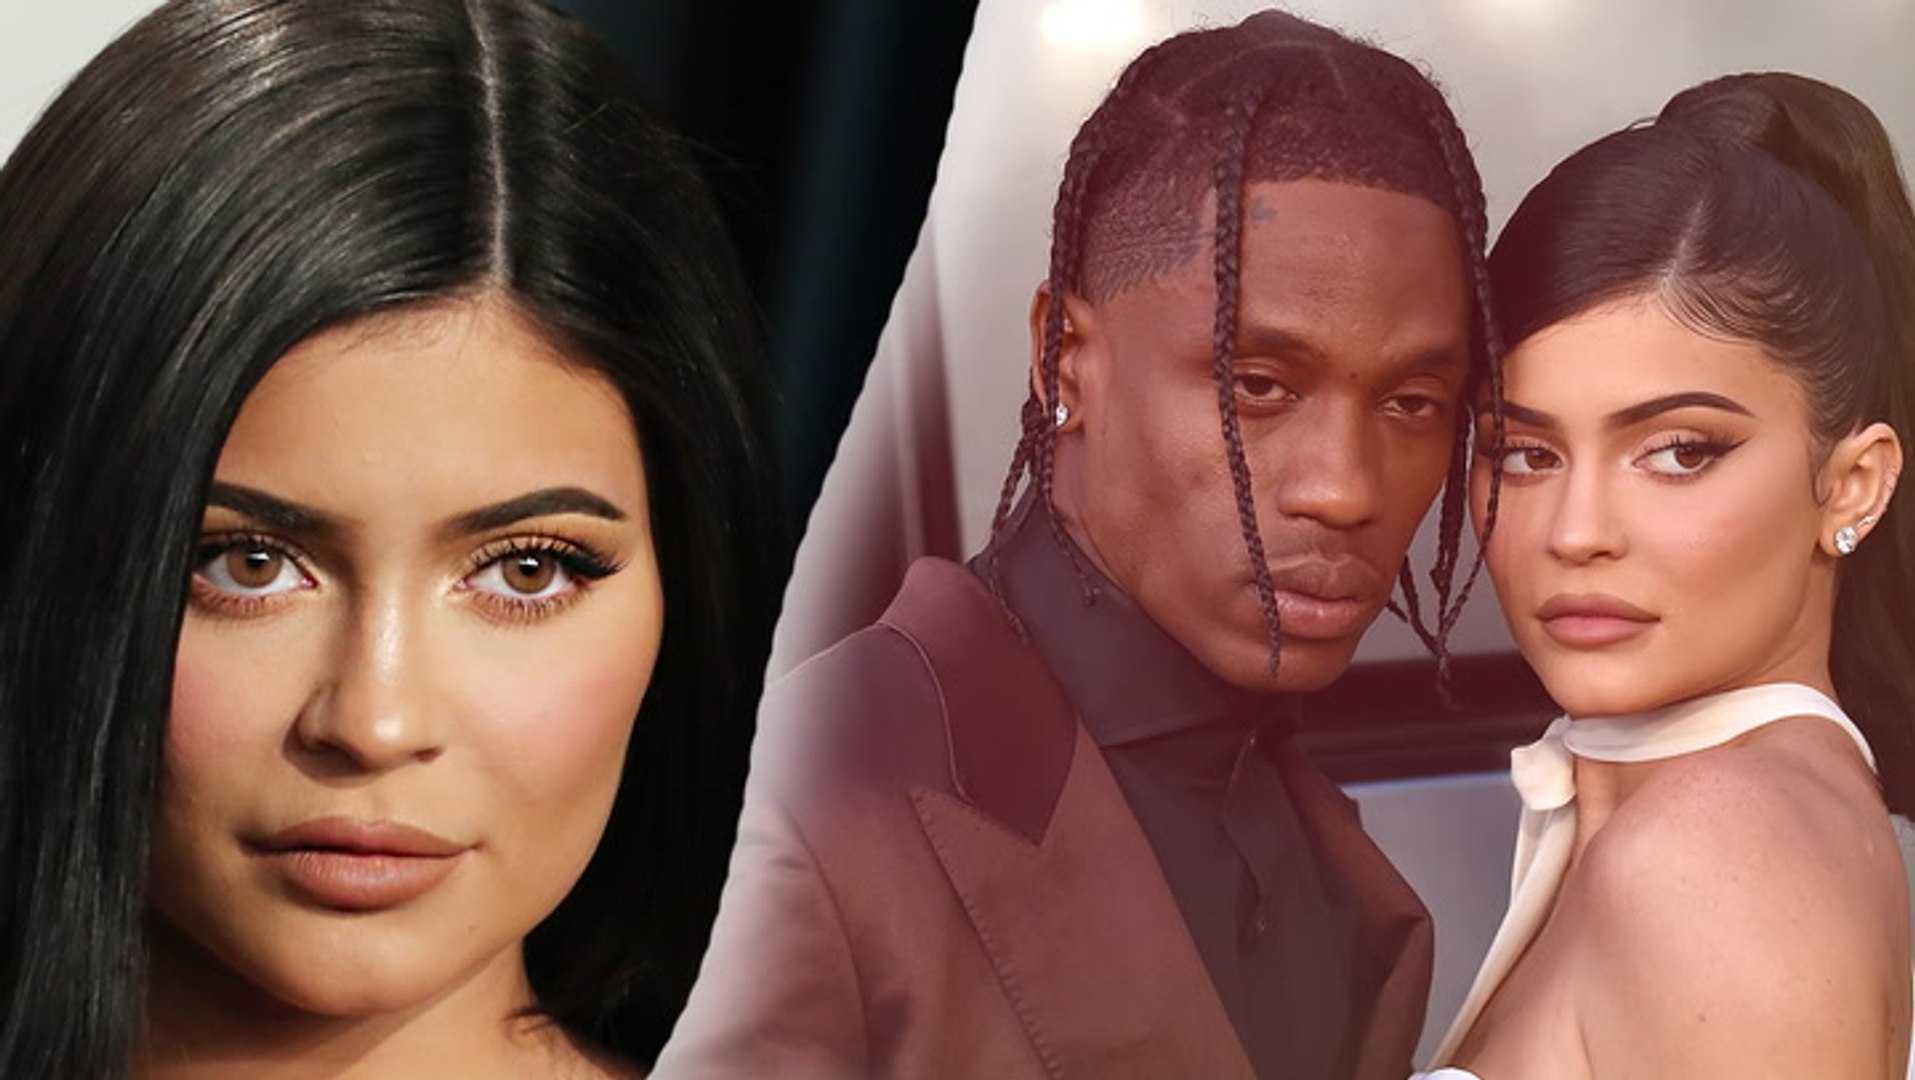 Kylie Jenner Reveals Massive Valentine's Day Gift From Travis Scott